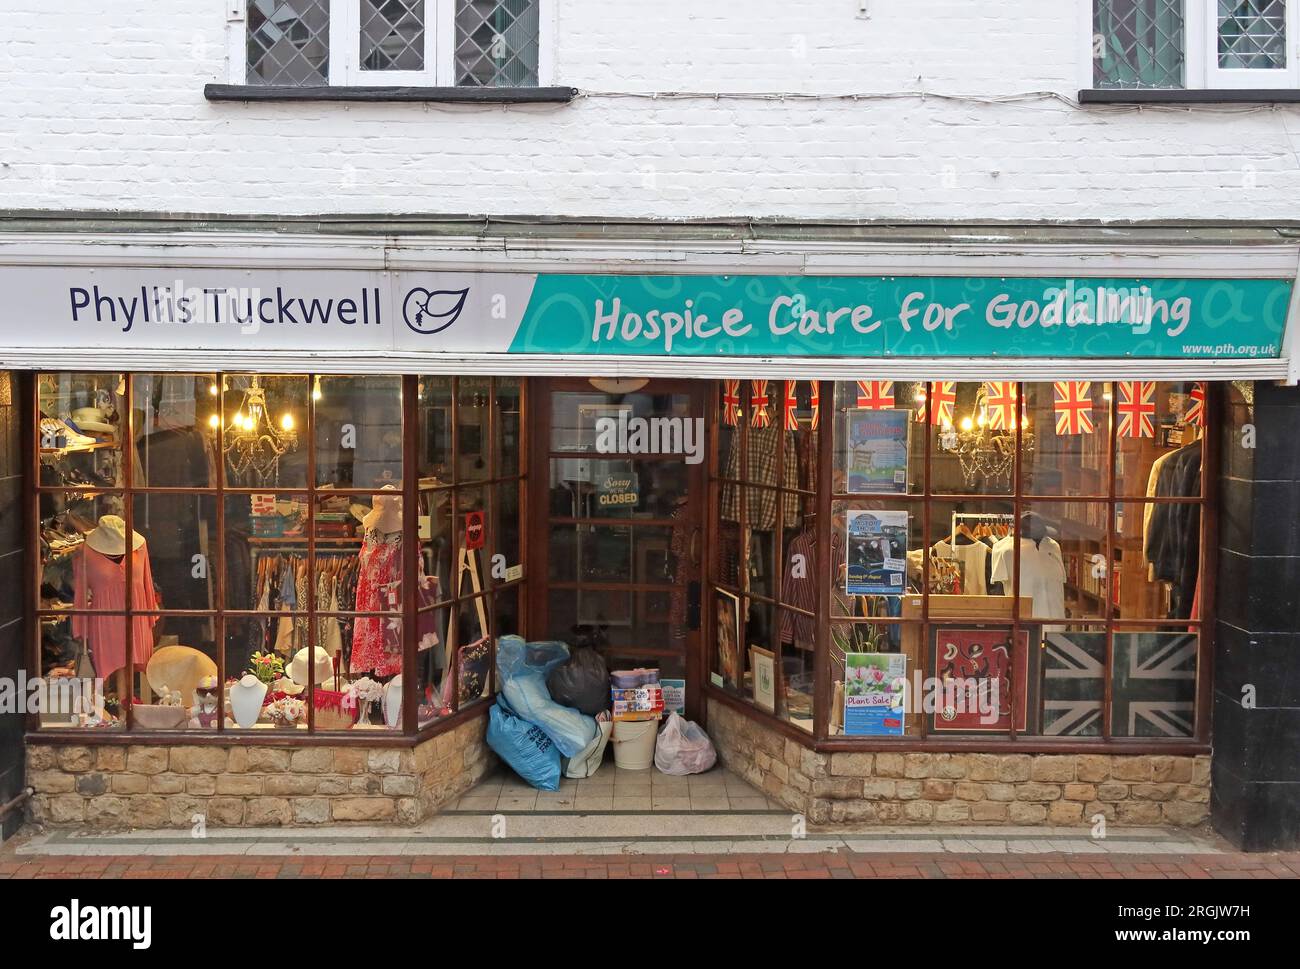 Phyllis Tuckwell charity shop, Hospice Care for Godalming, 114 High St, Godalming, Surrey, England, UK,  GU7 1DW Stock Photo